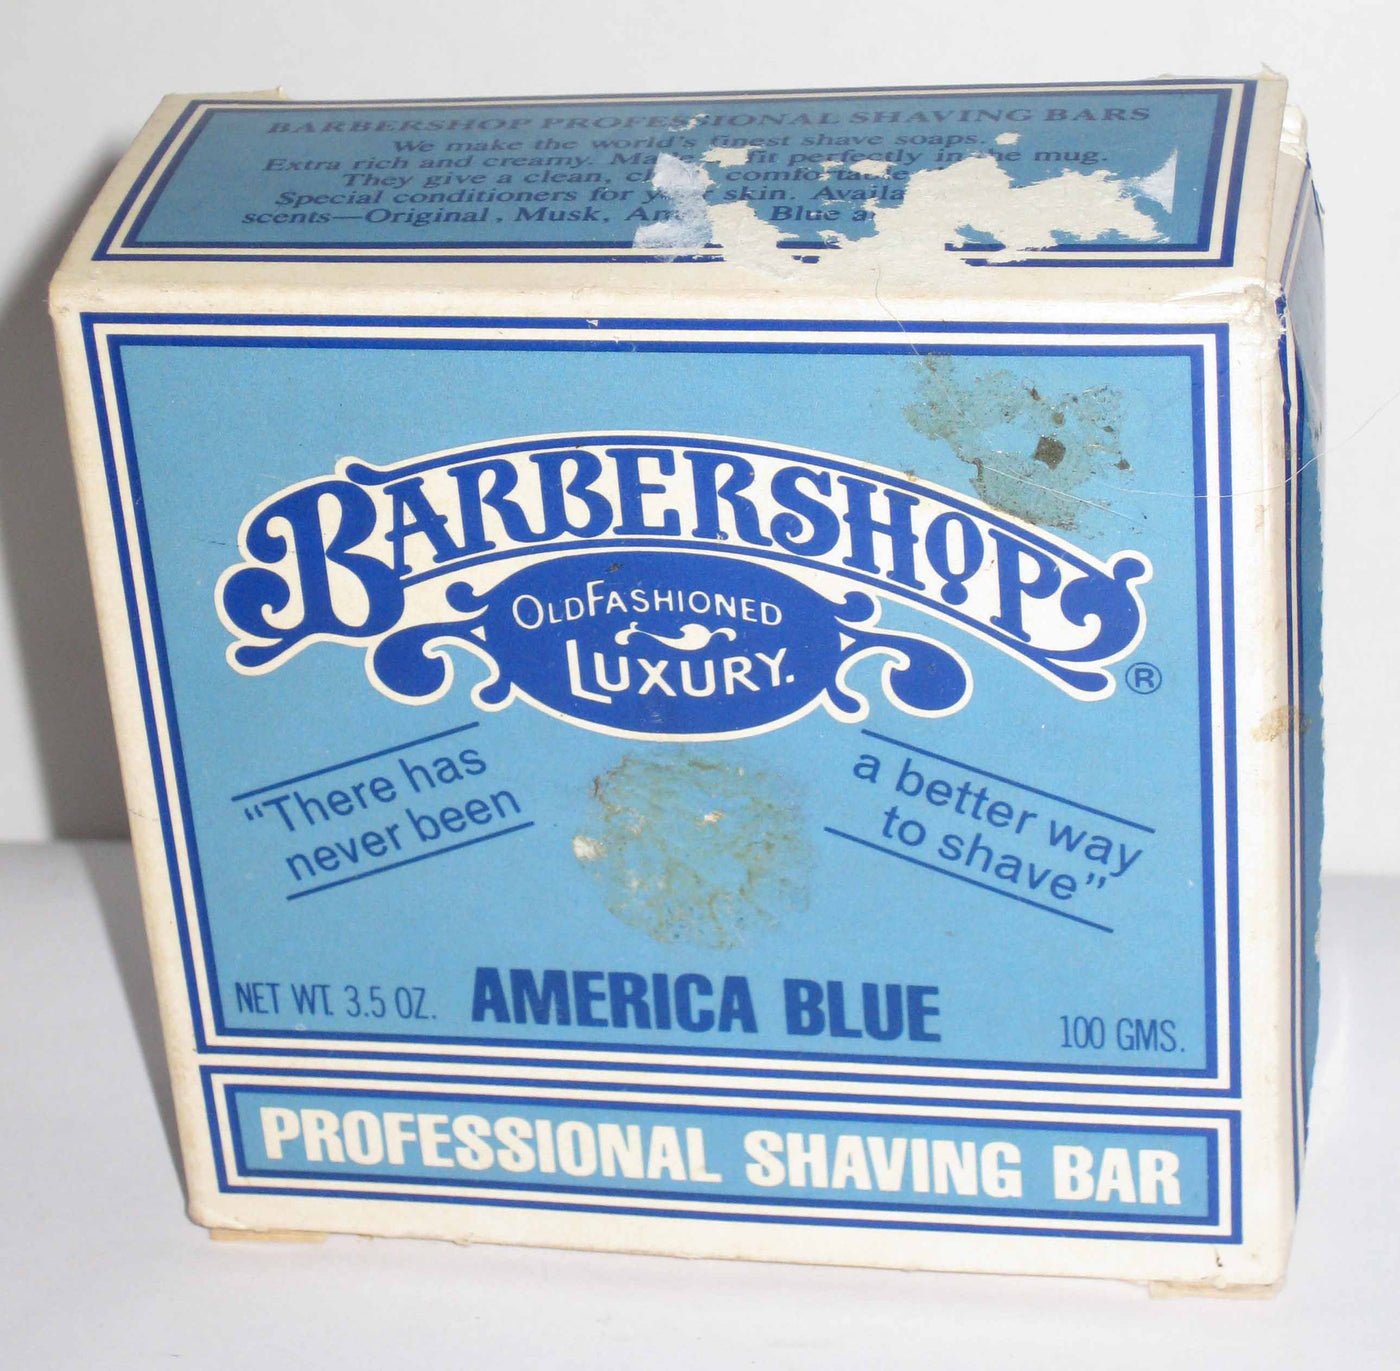 Barbershop Old Fashioned Luxury America Blue Musk Soap